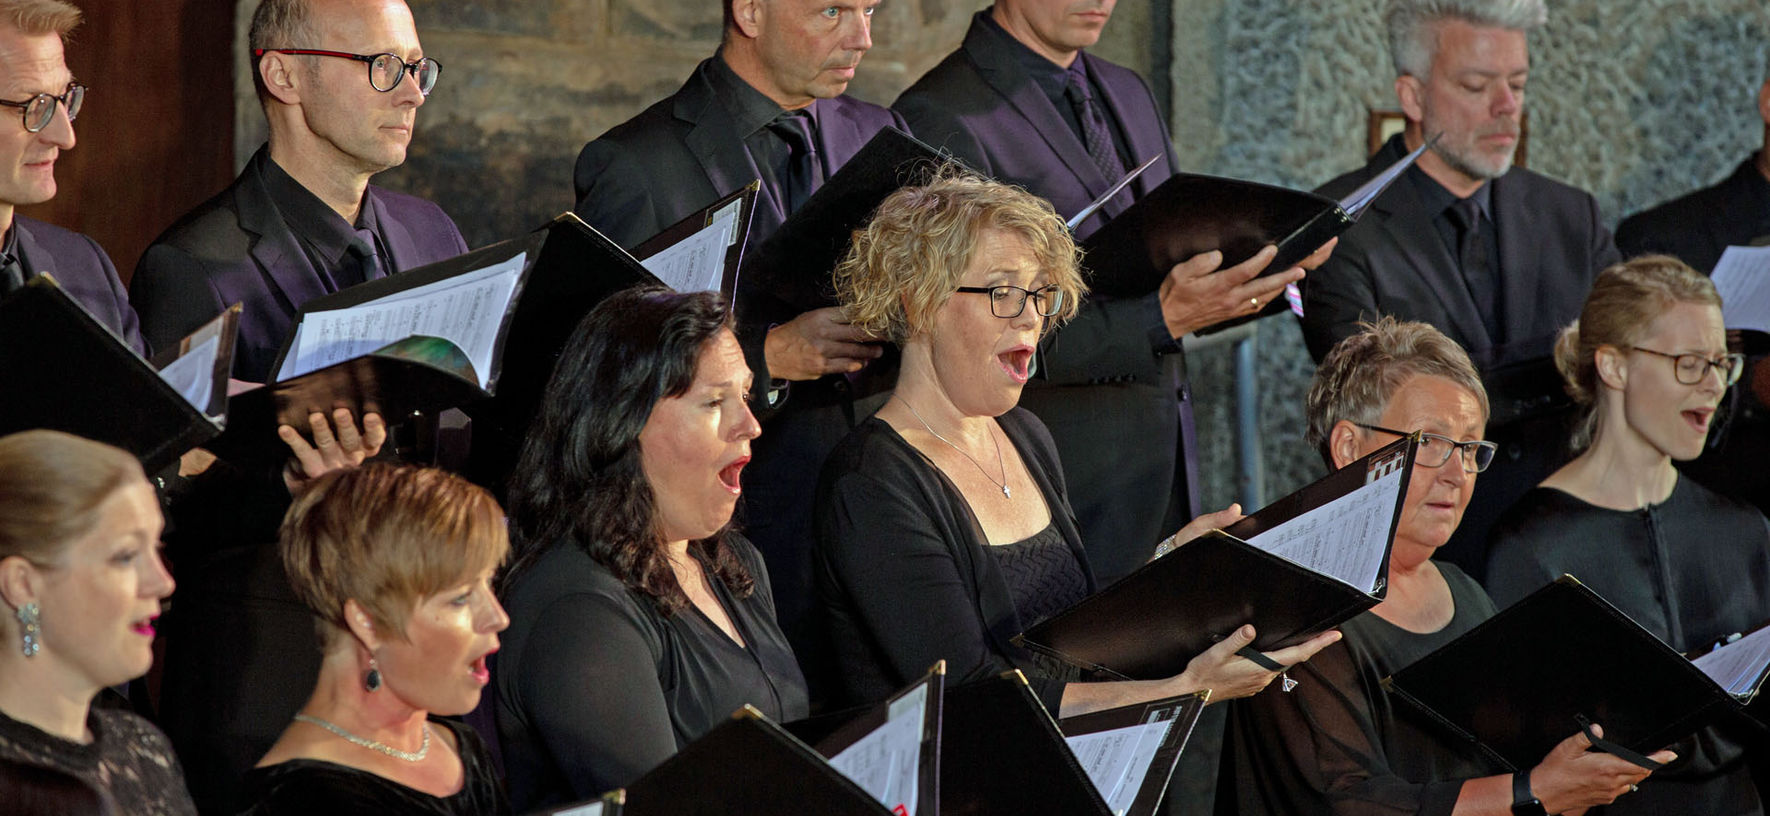 Choir singing in a church © Nolte Photography